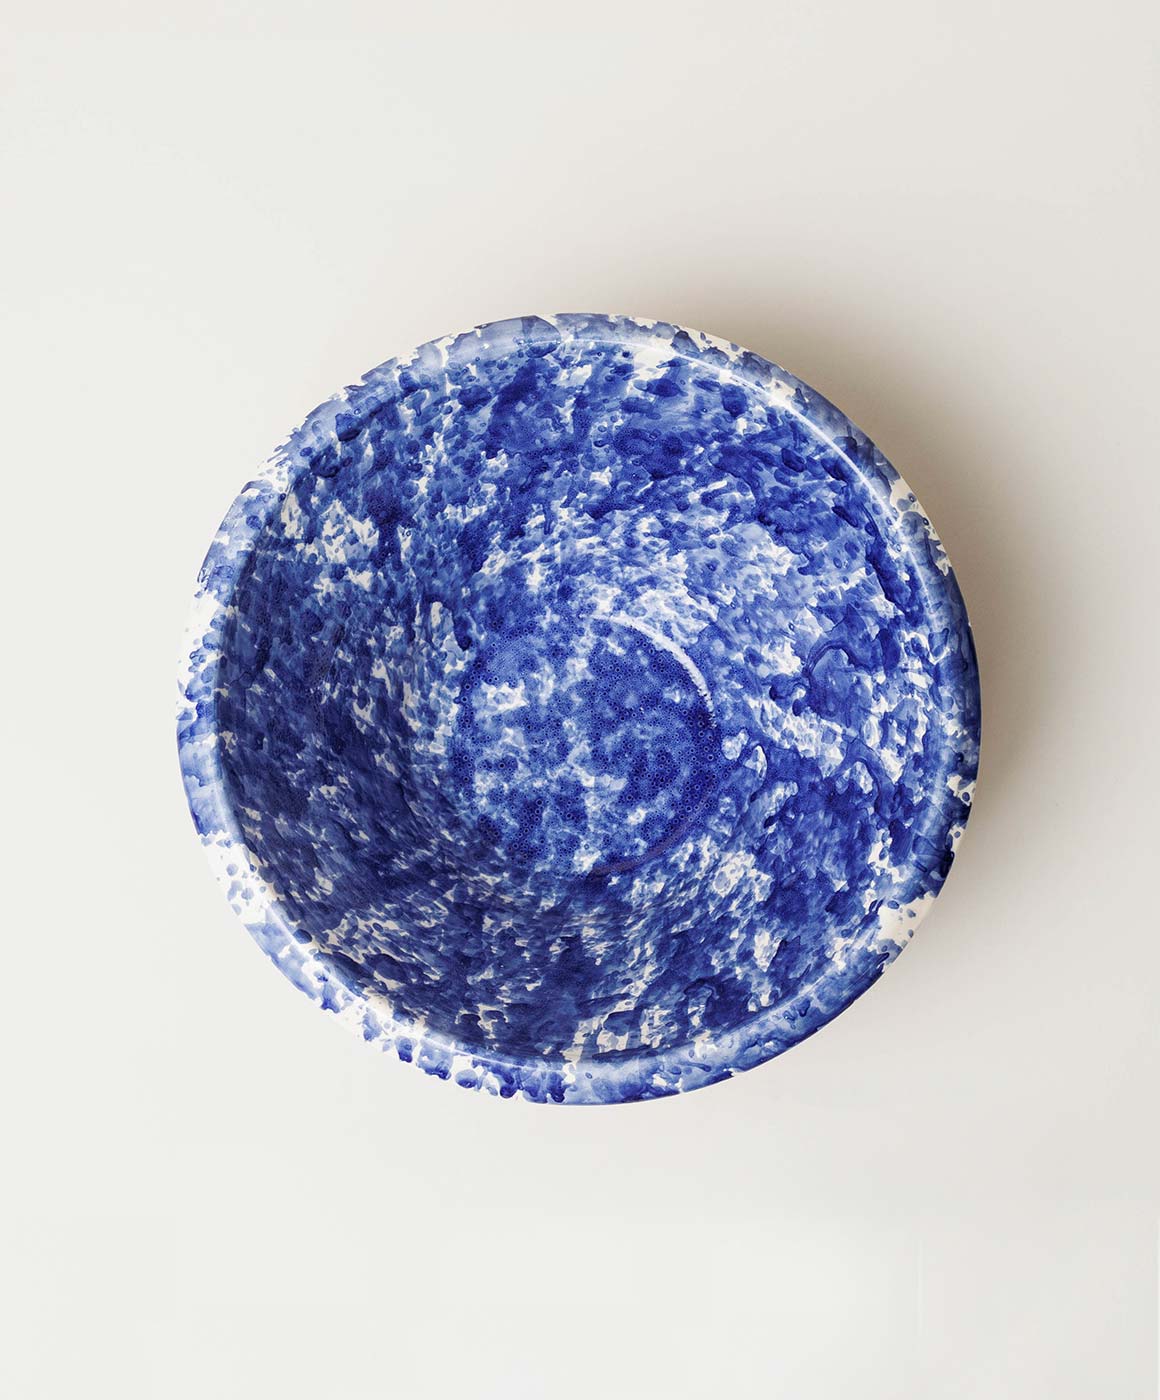   Blue Splatterware Mixing Bowl  